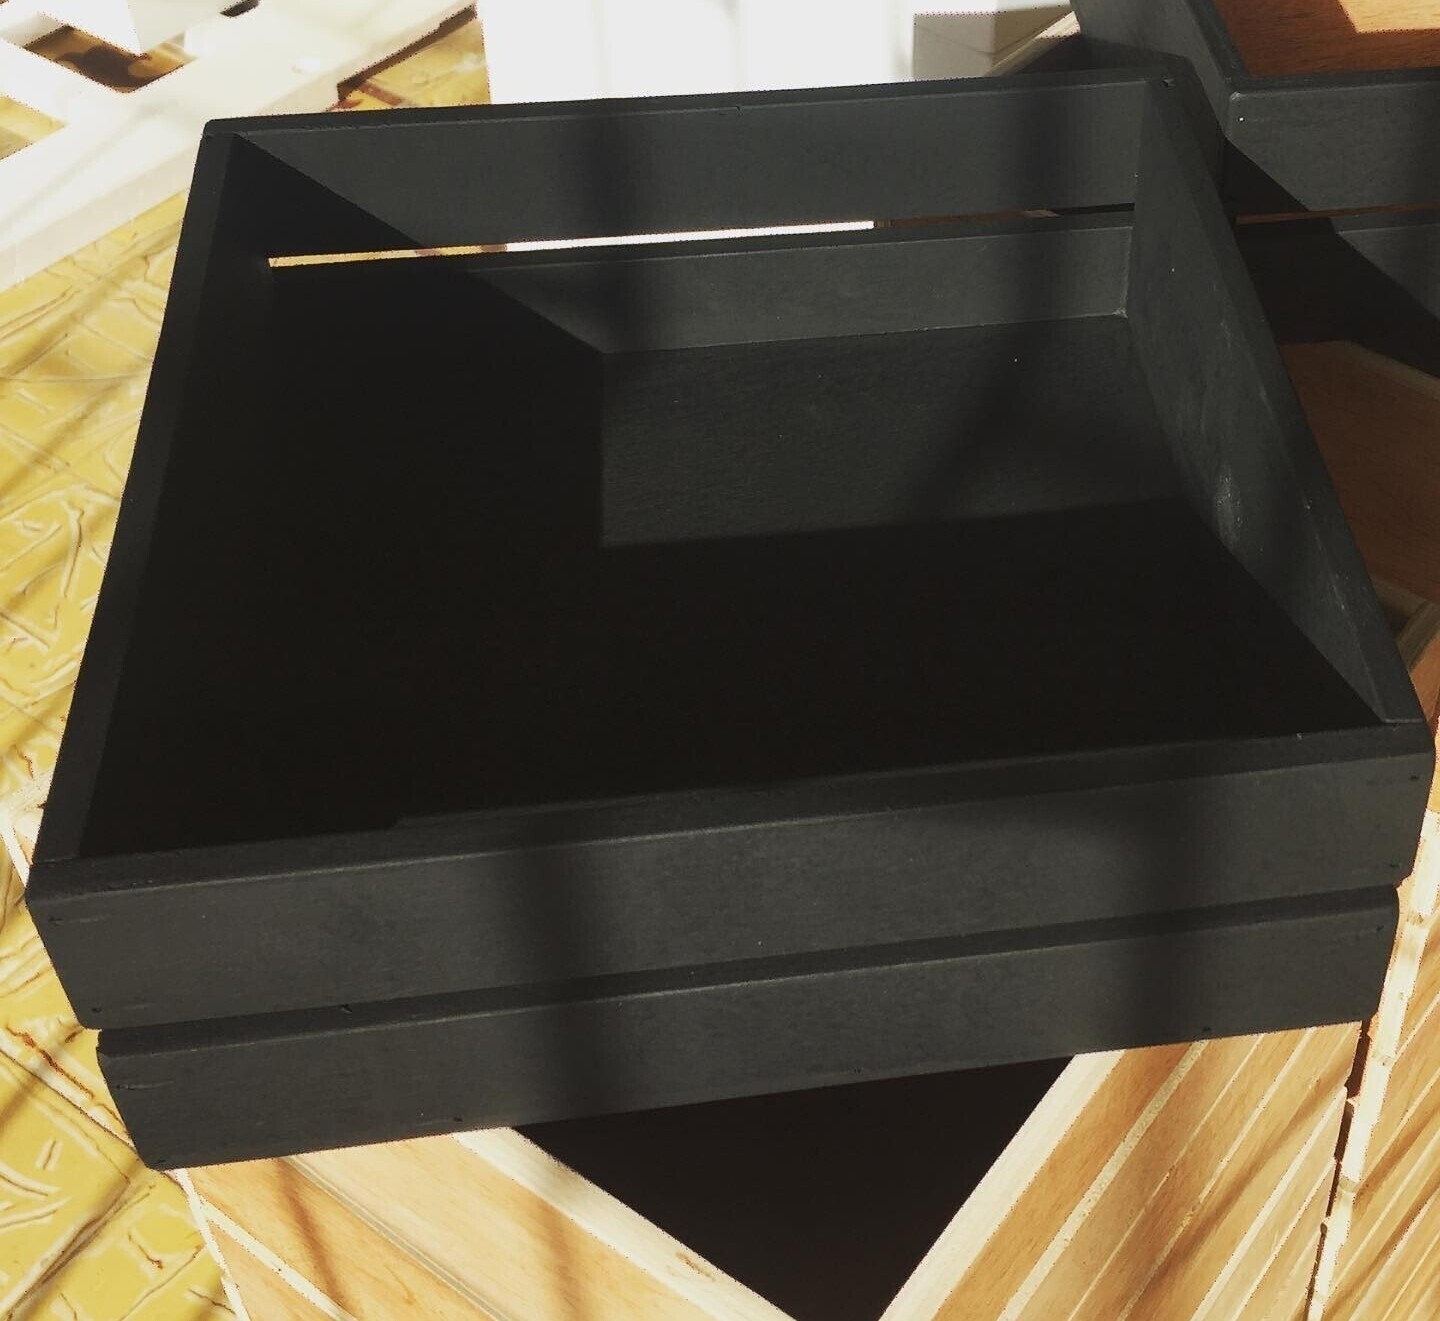 10.5x10.5x3 inch black crate gift box